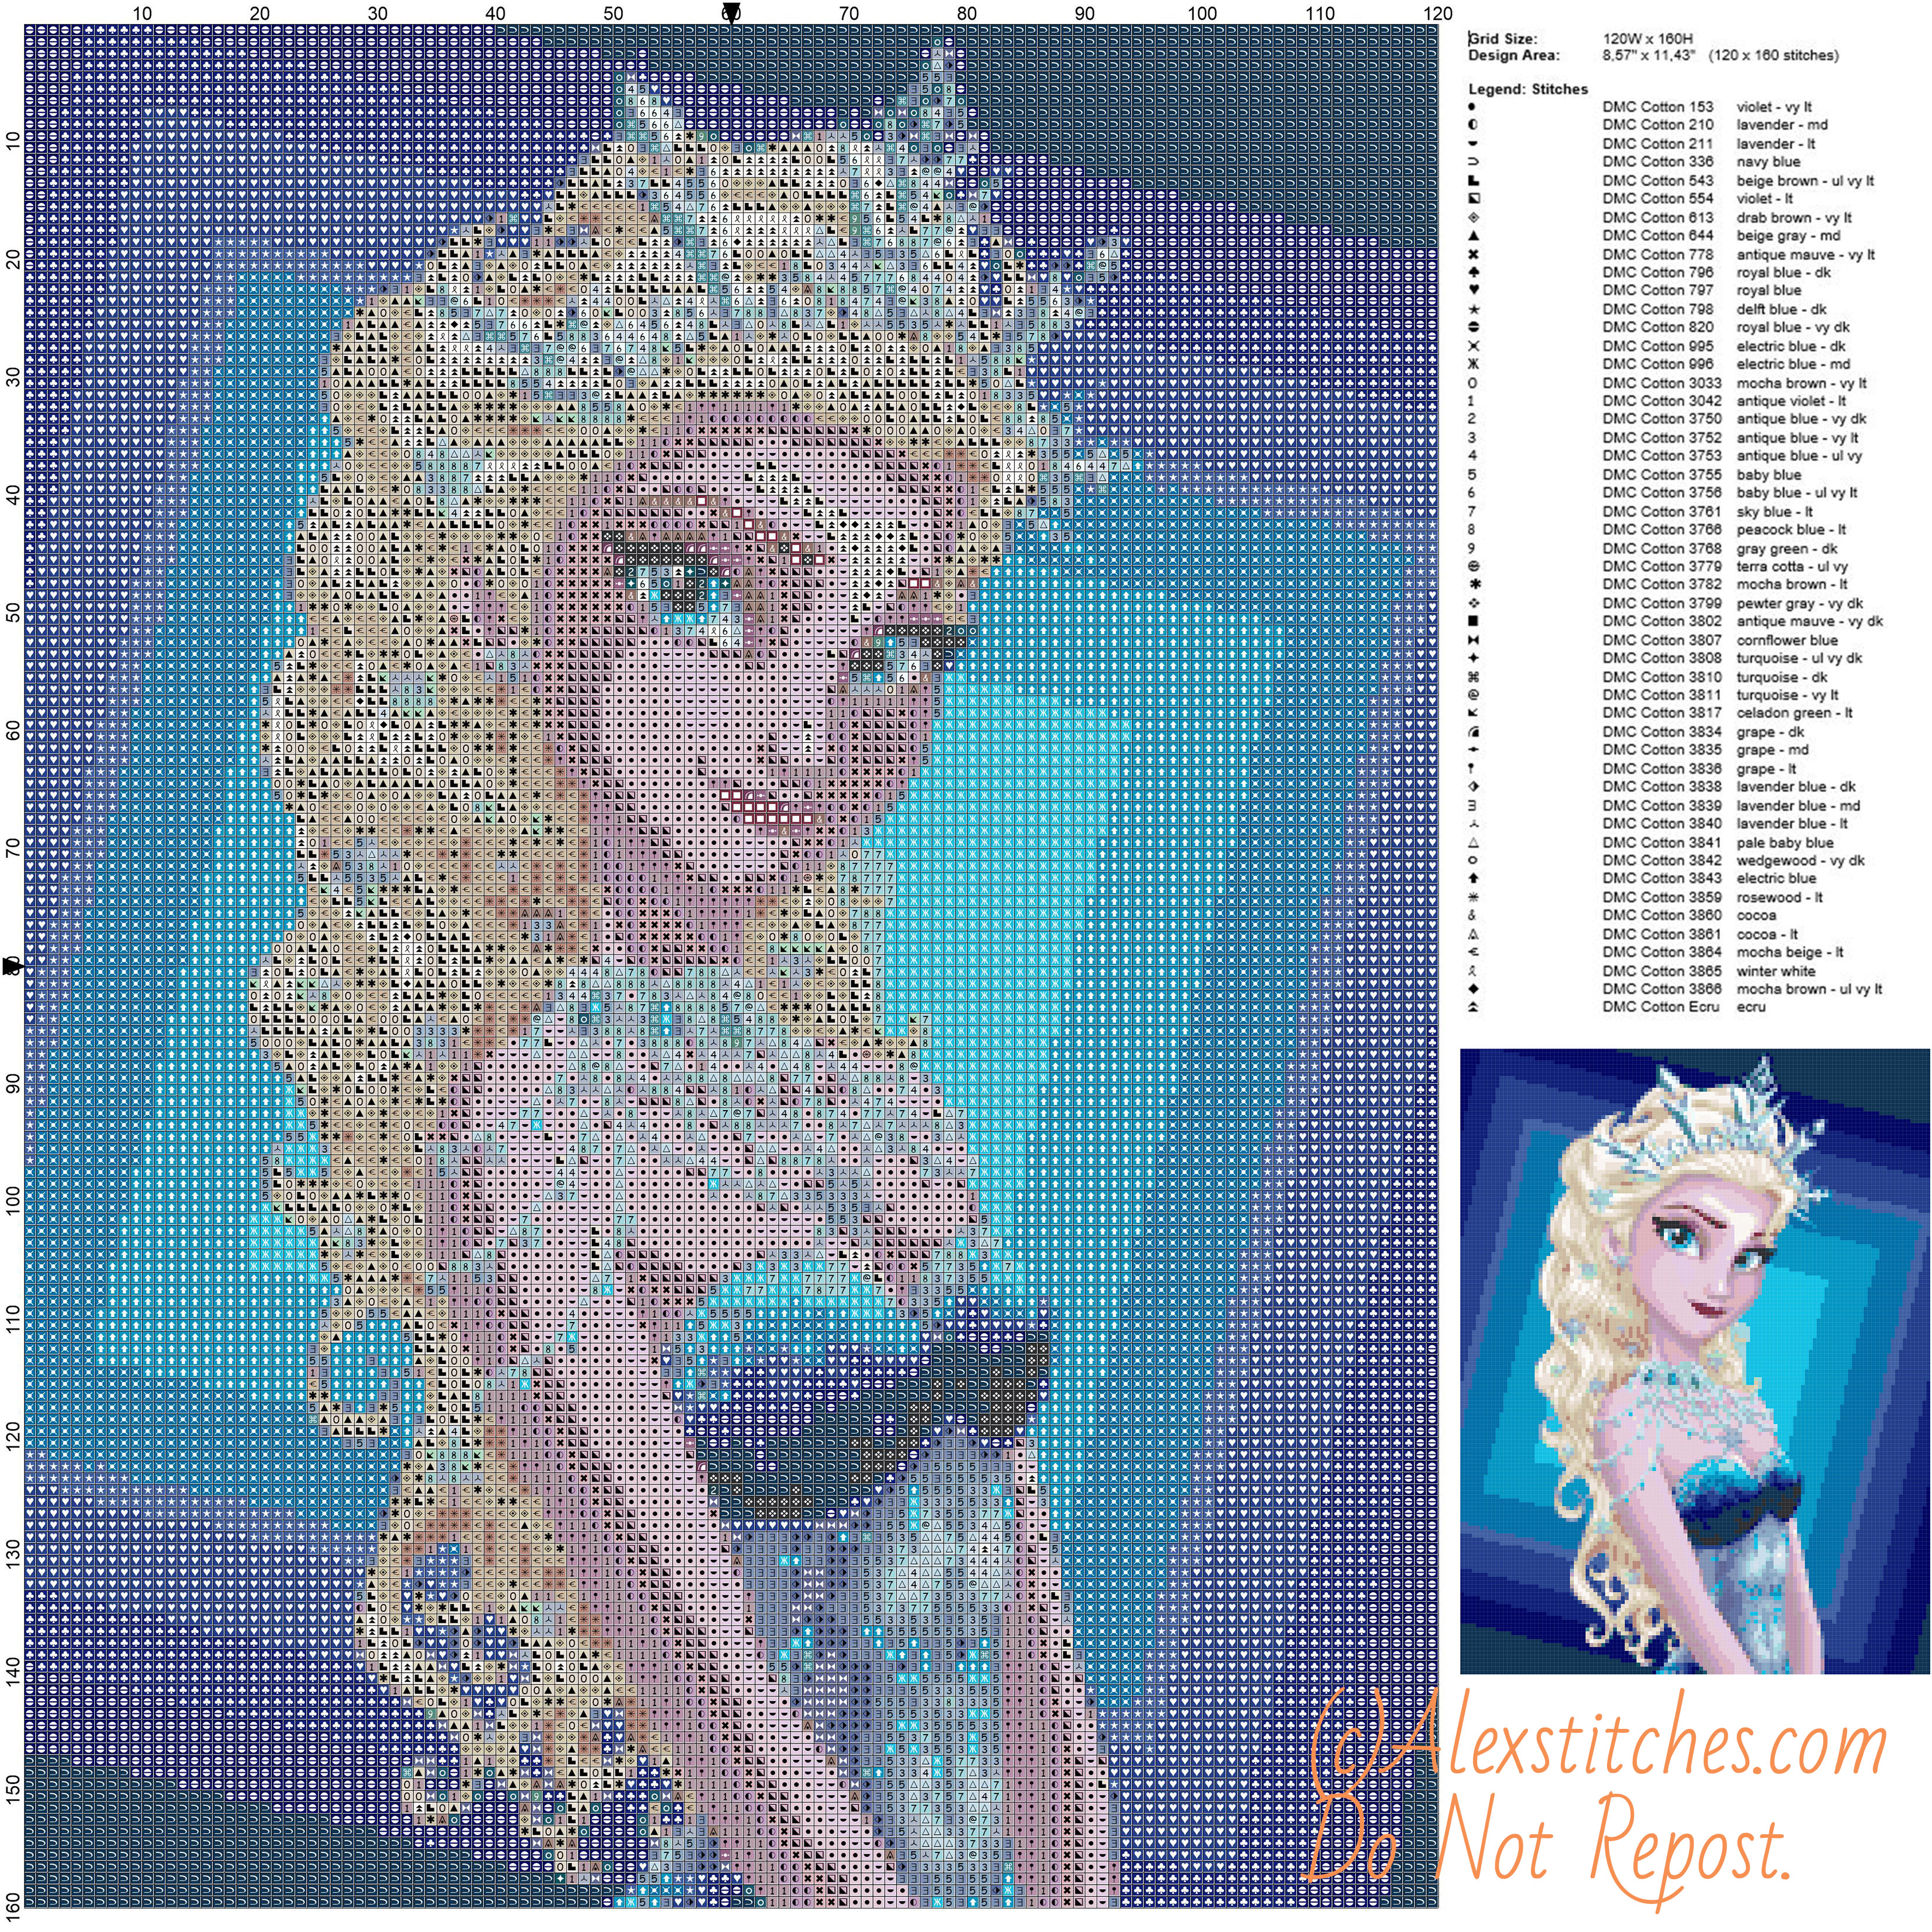 Queen Elsa Frozen free cross stitch pattern 120x160 50 colori